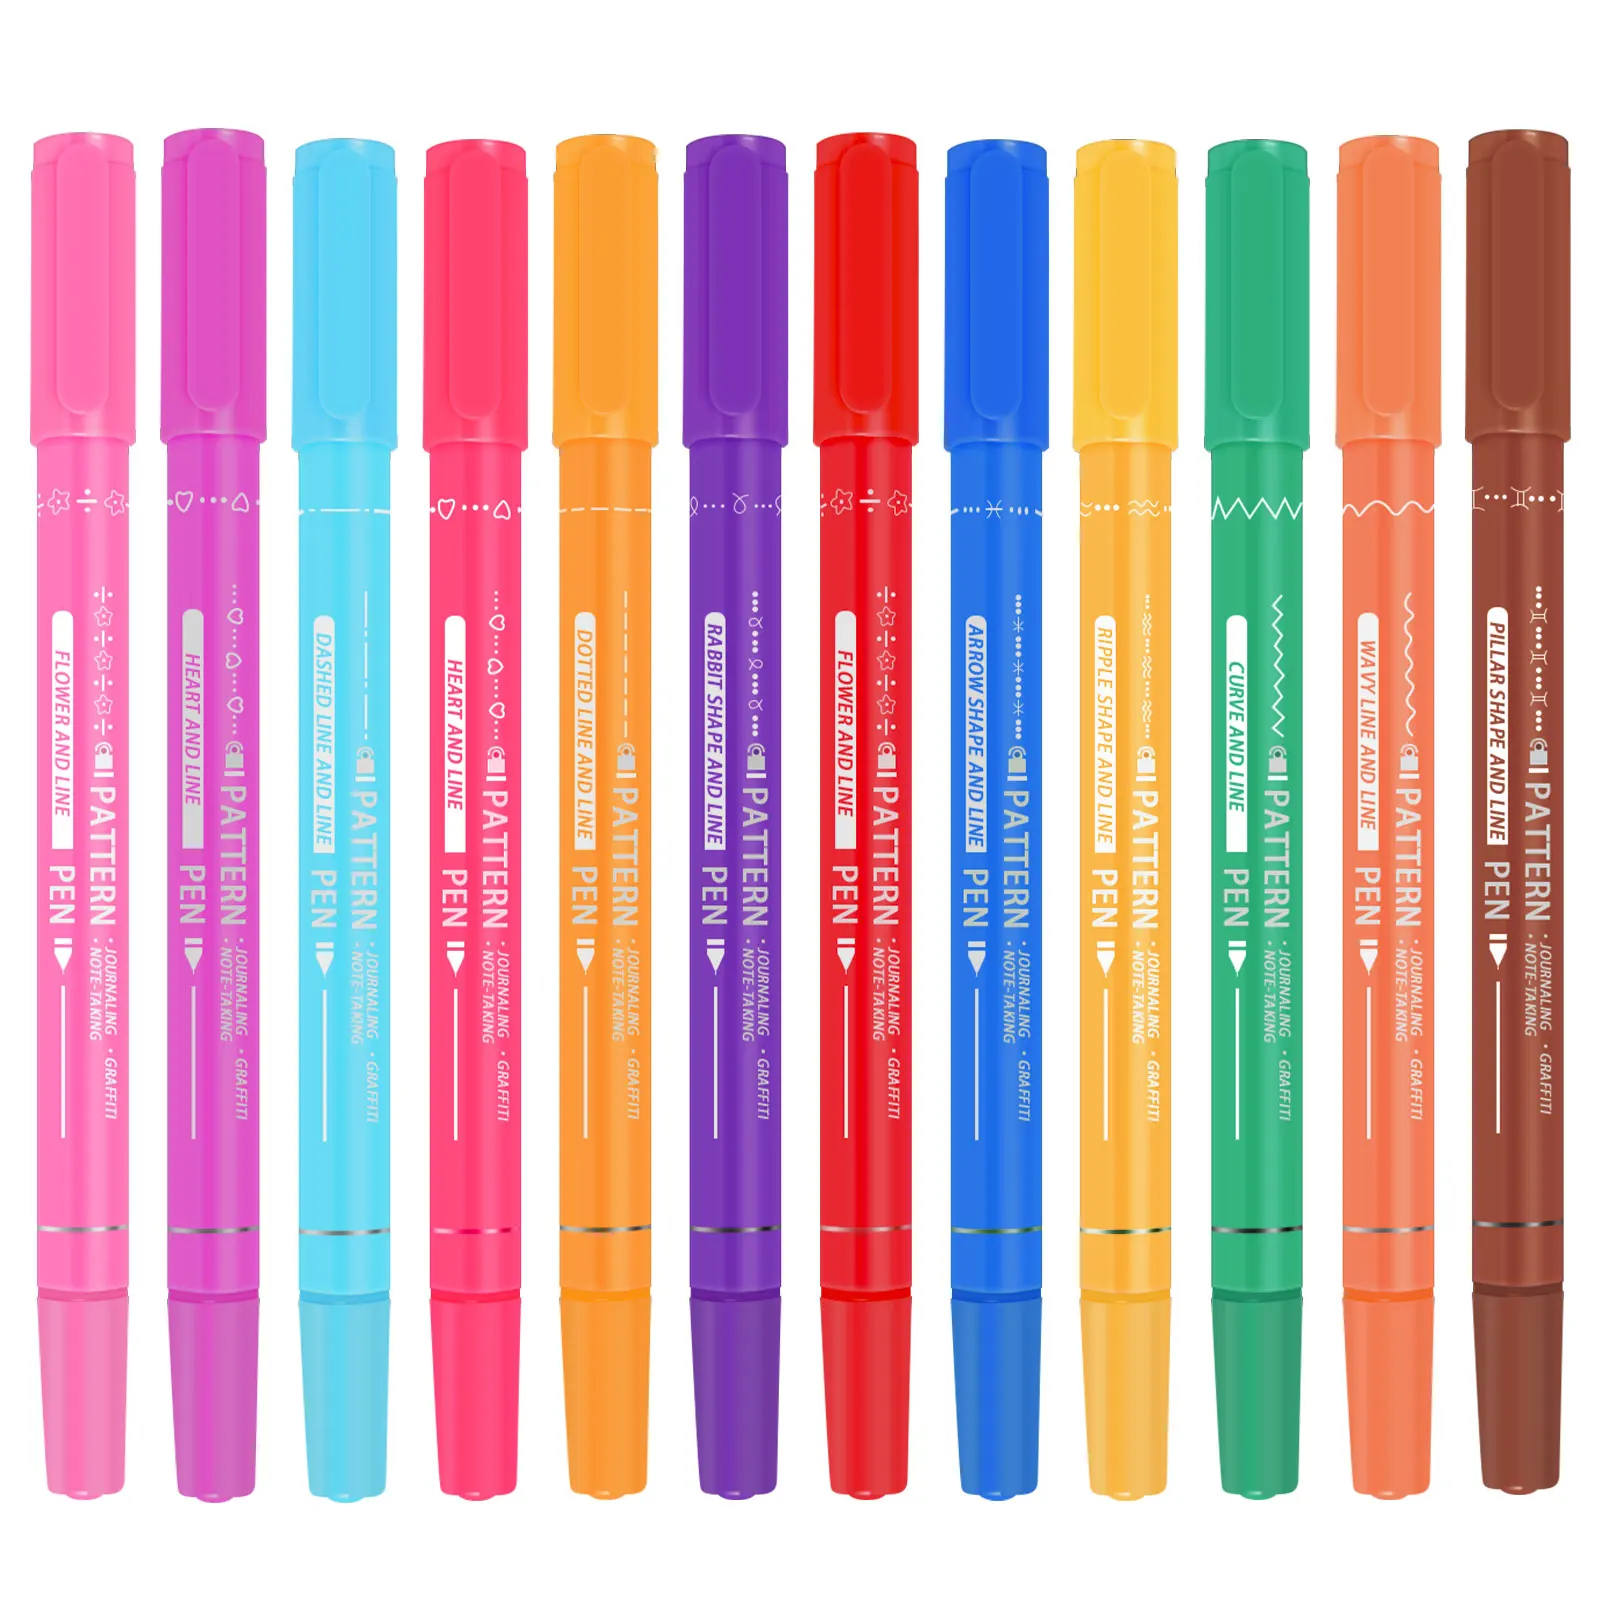 https://ae01.alicdn.com/kf/Sf471a4da9191476db2cdf33f72772681Q/12-Pcs-Curve-Highlighter-Pen-Set-with-10-Different-Curve-Shapes-Dual-Tip-Roller-Highlighter-Pen.jpg